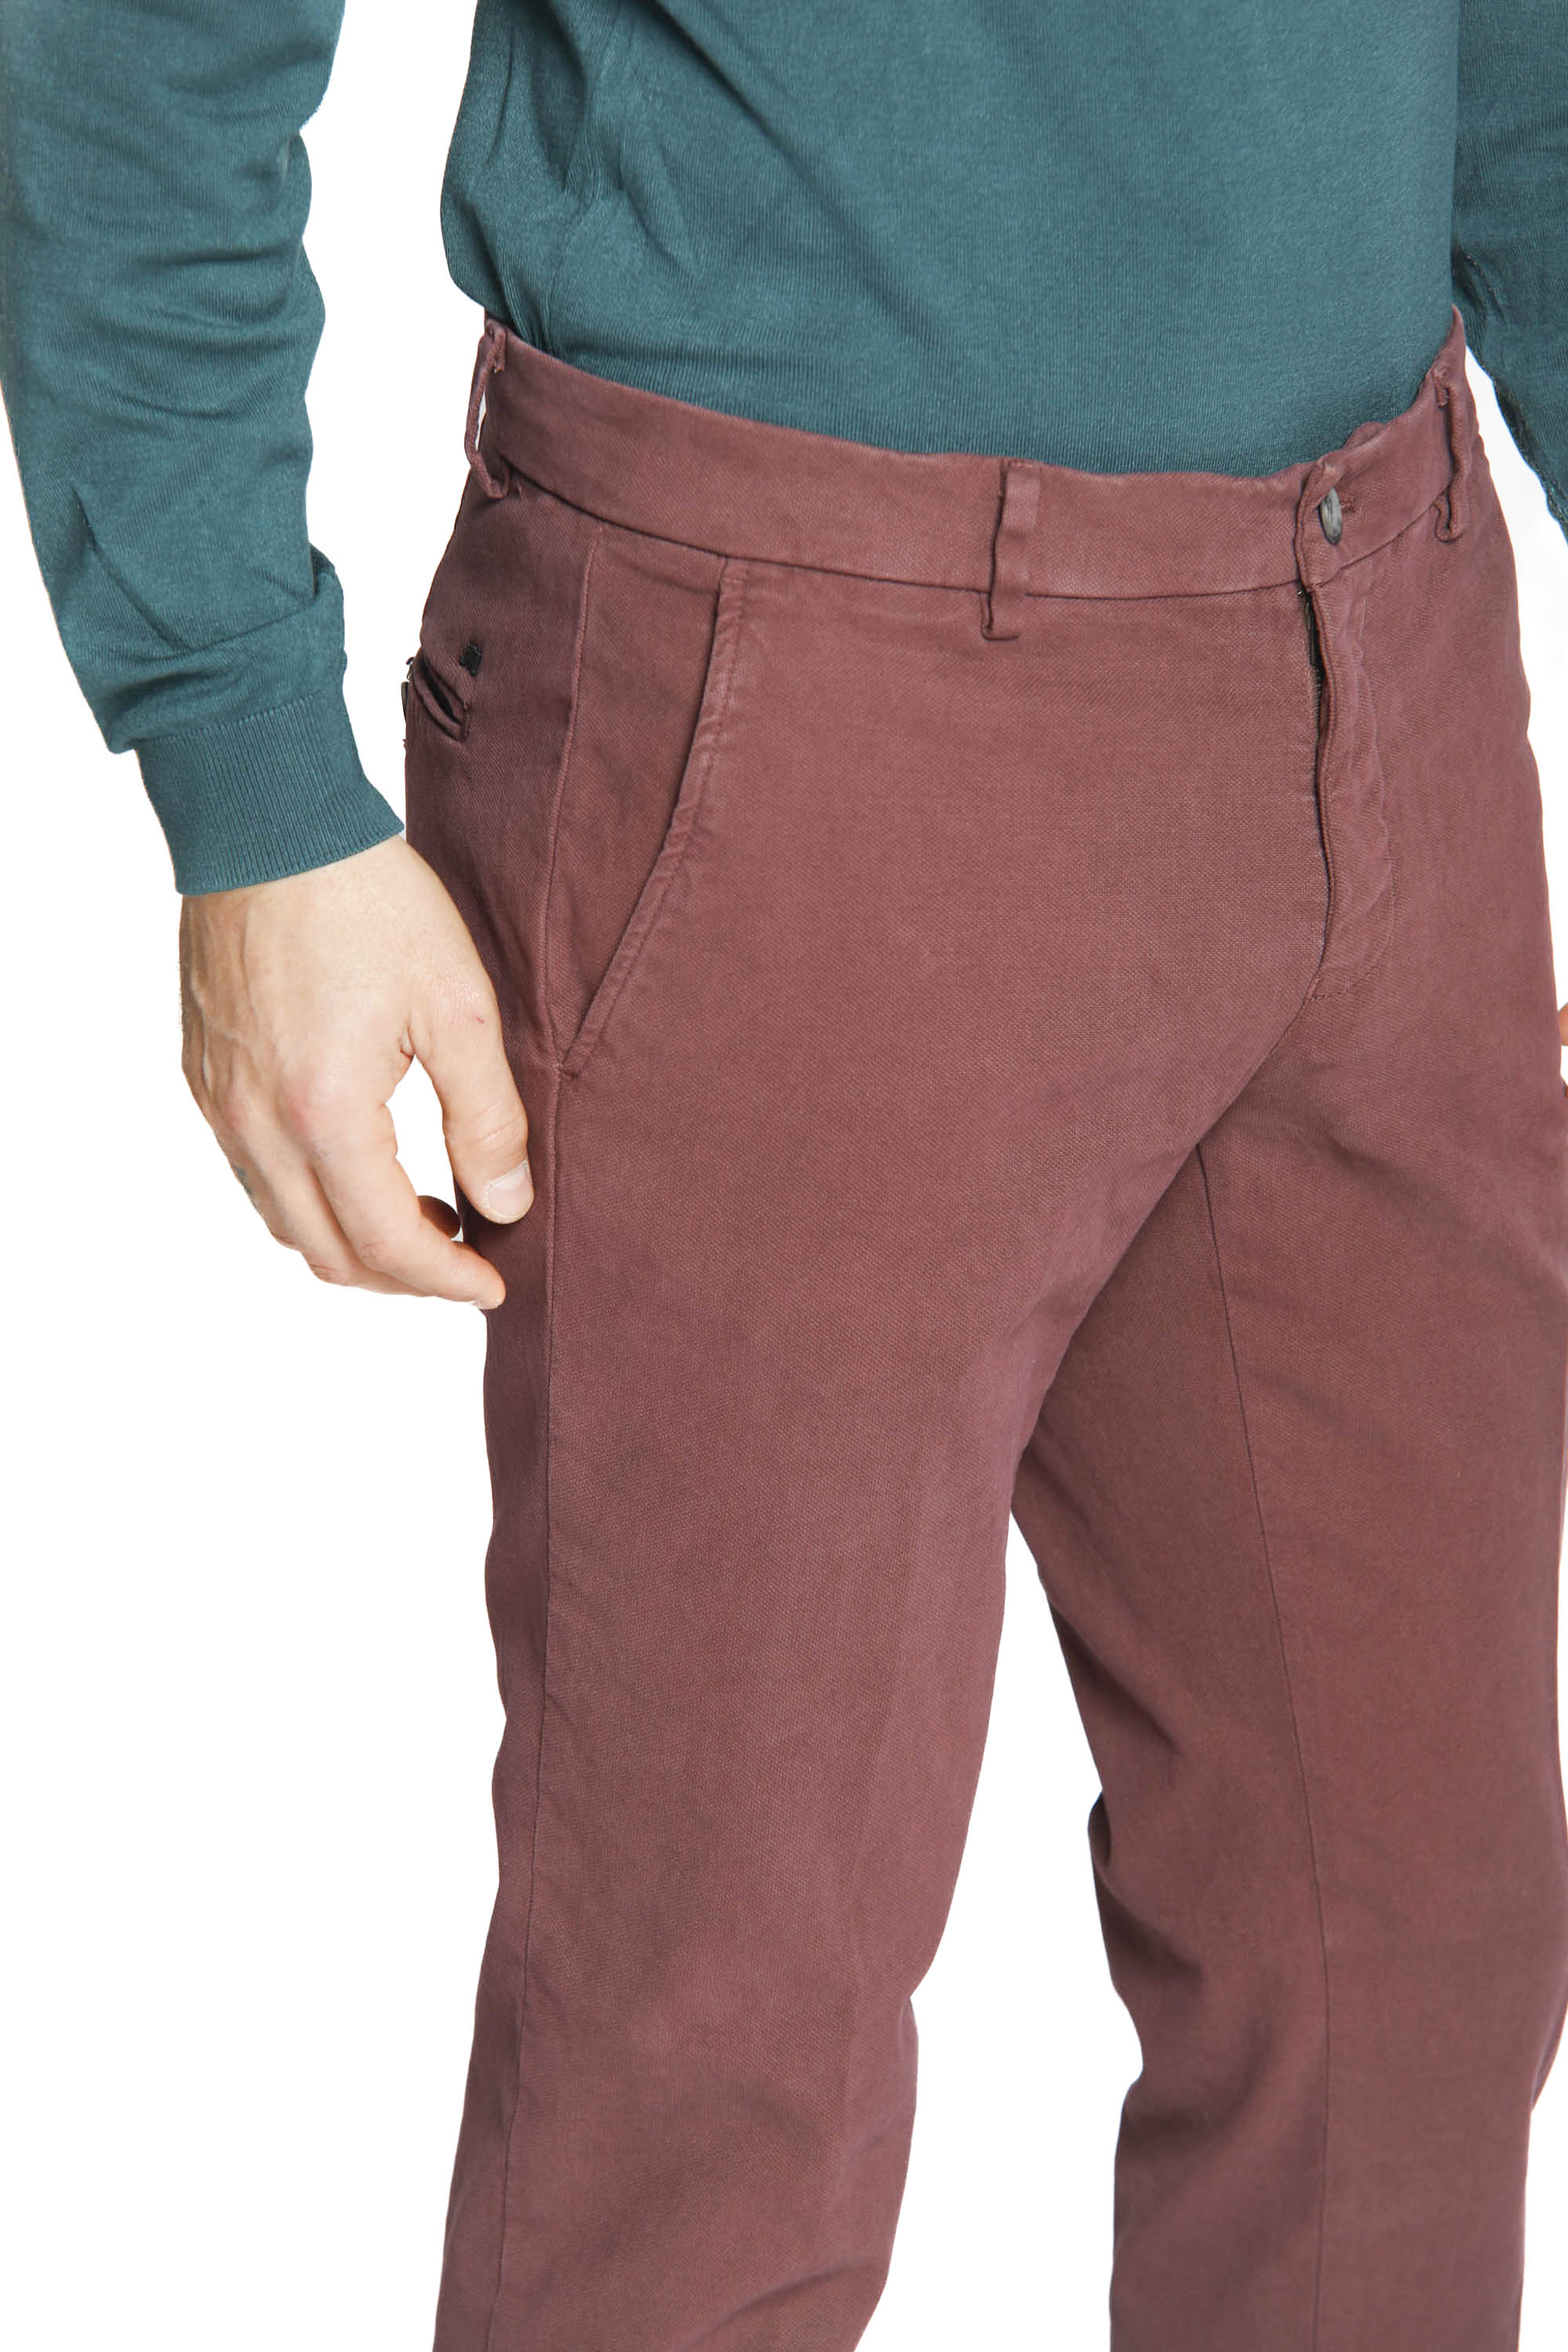 Milano Style pantalone chino uomo in gabardina e cotone modal stretch extra slim